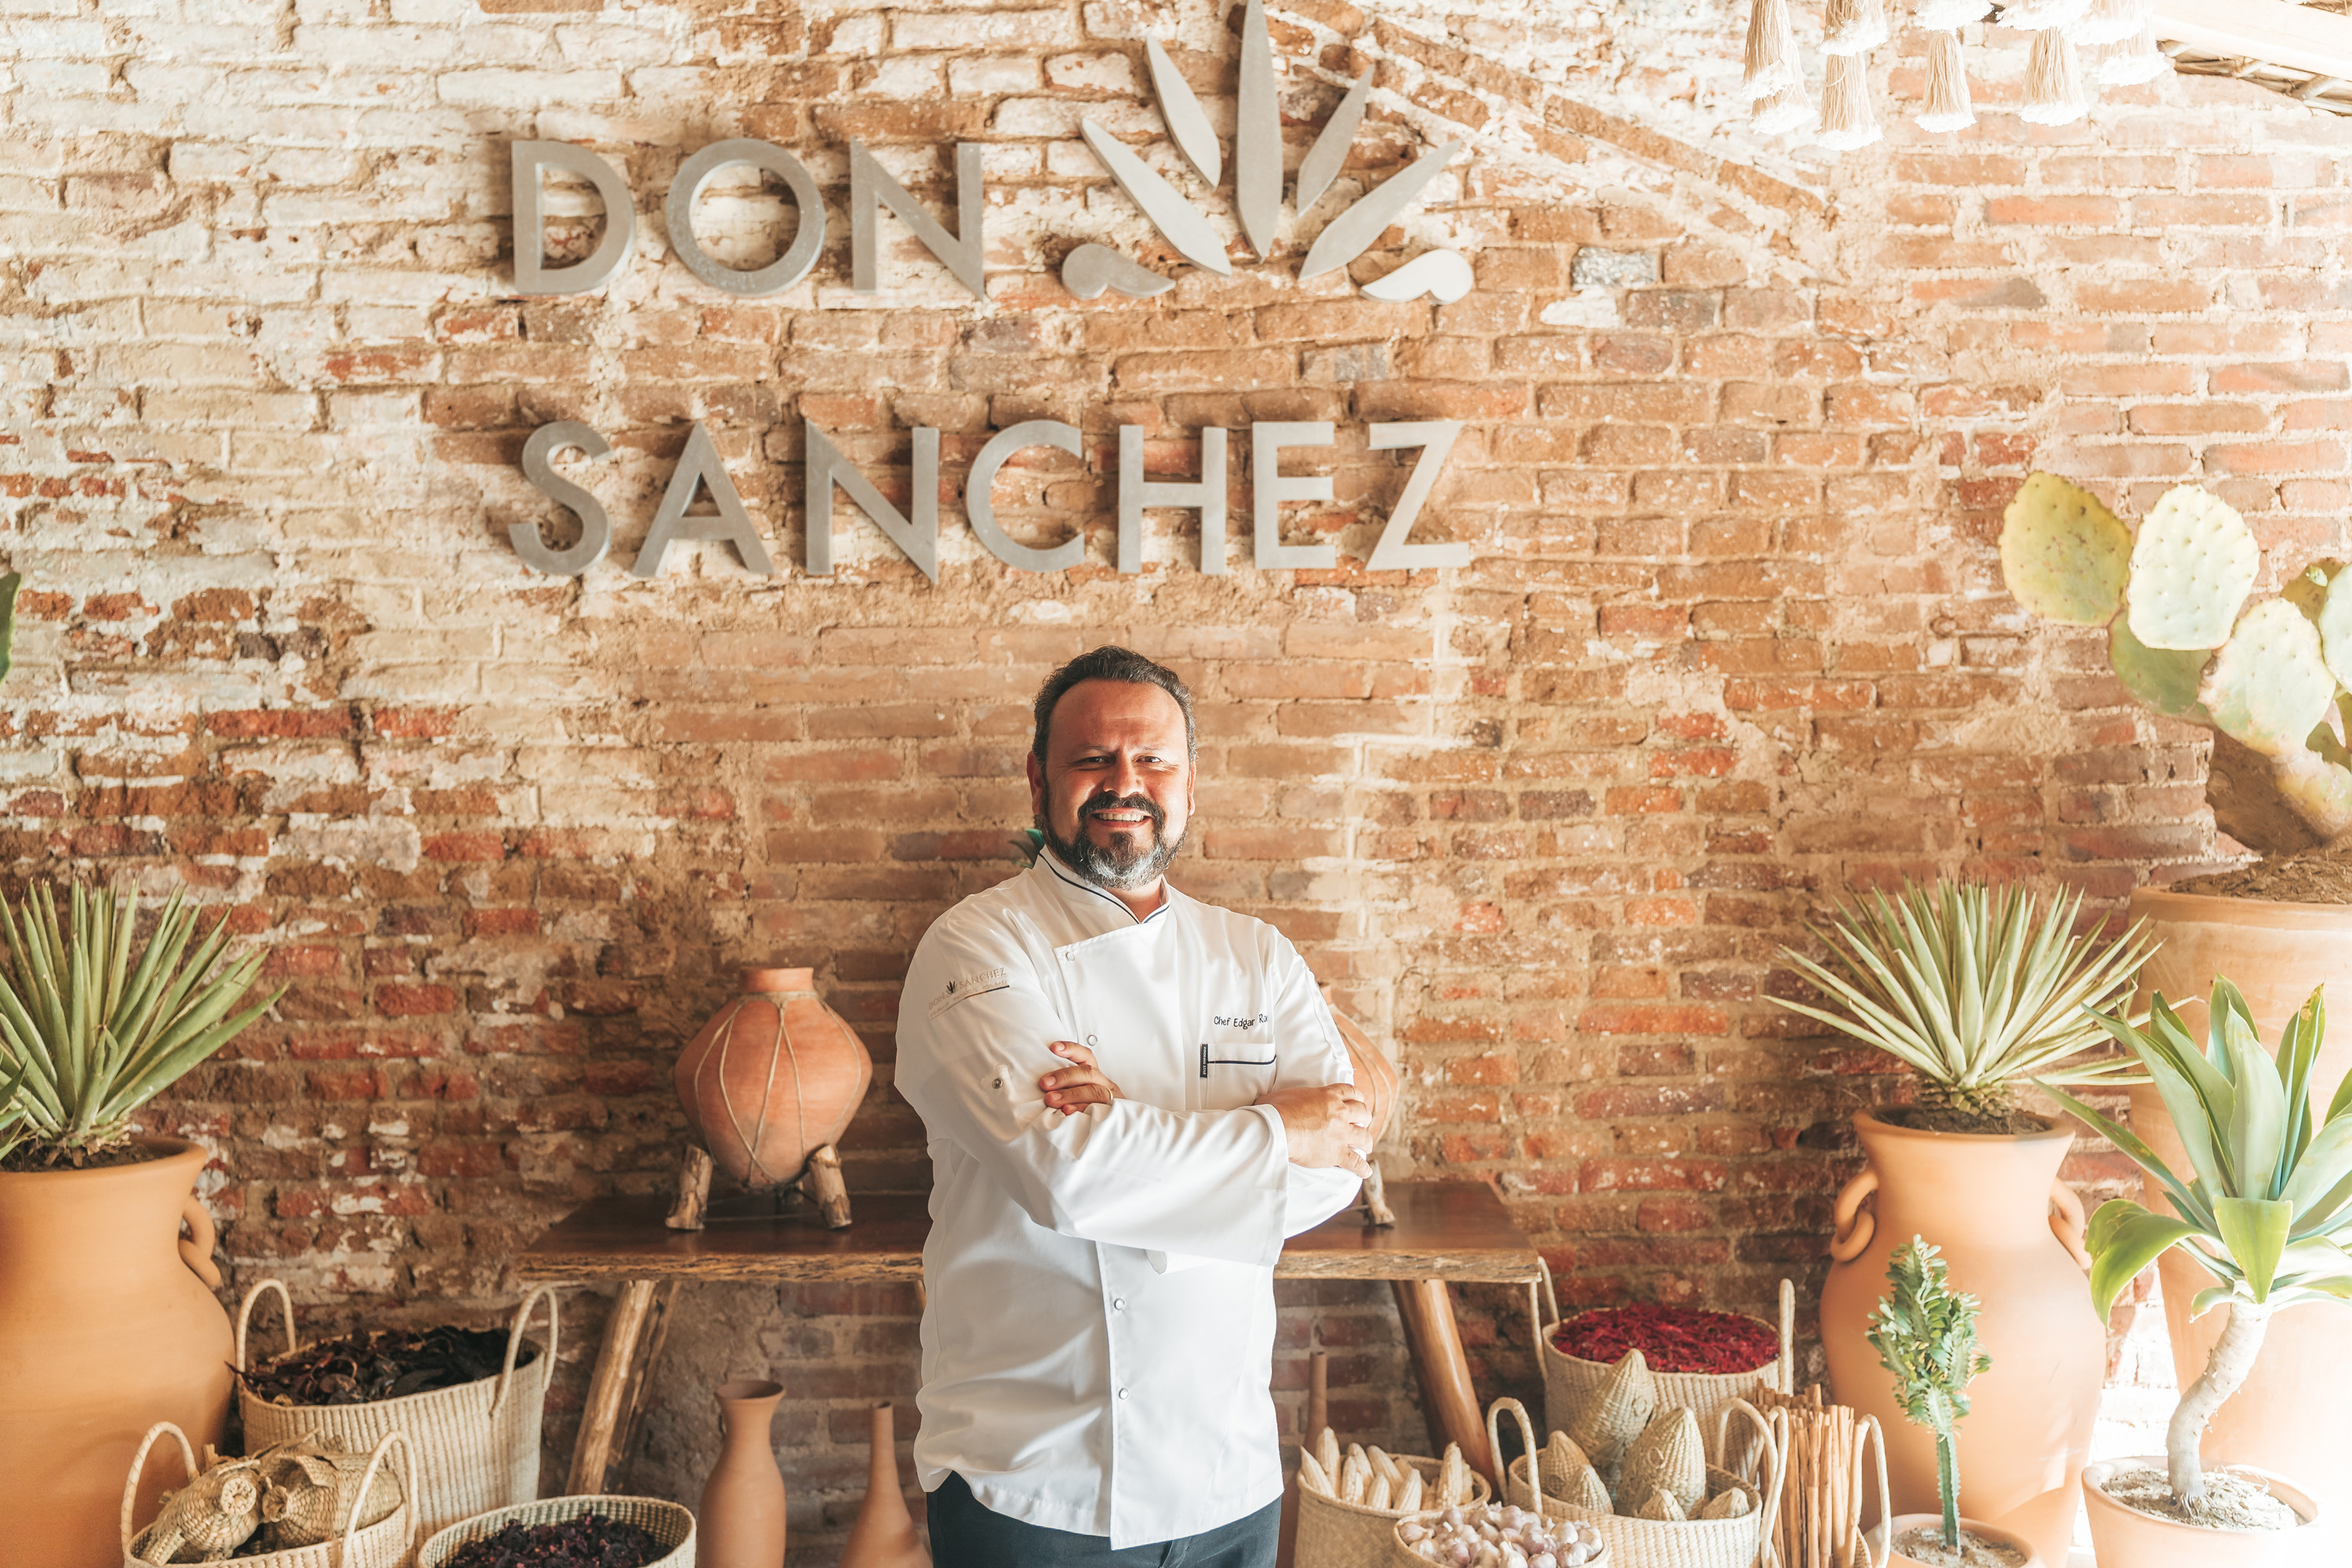 Award winning restaurant Don Sanchez in San Jose del Cabo Mexico